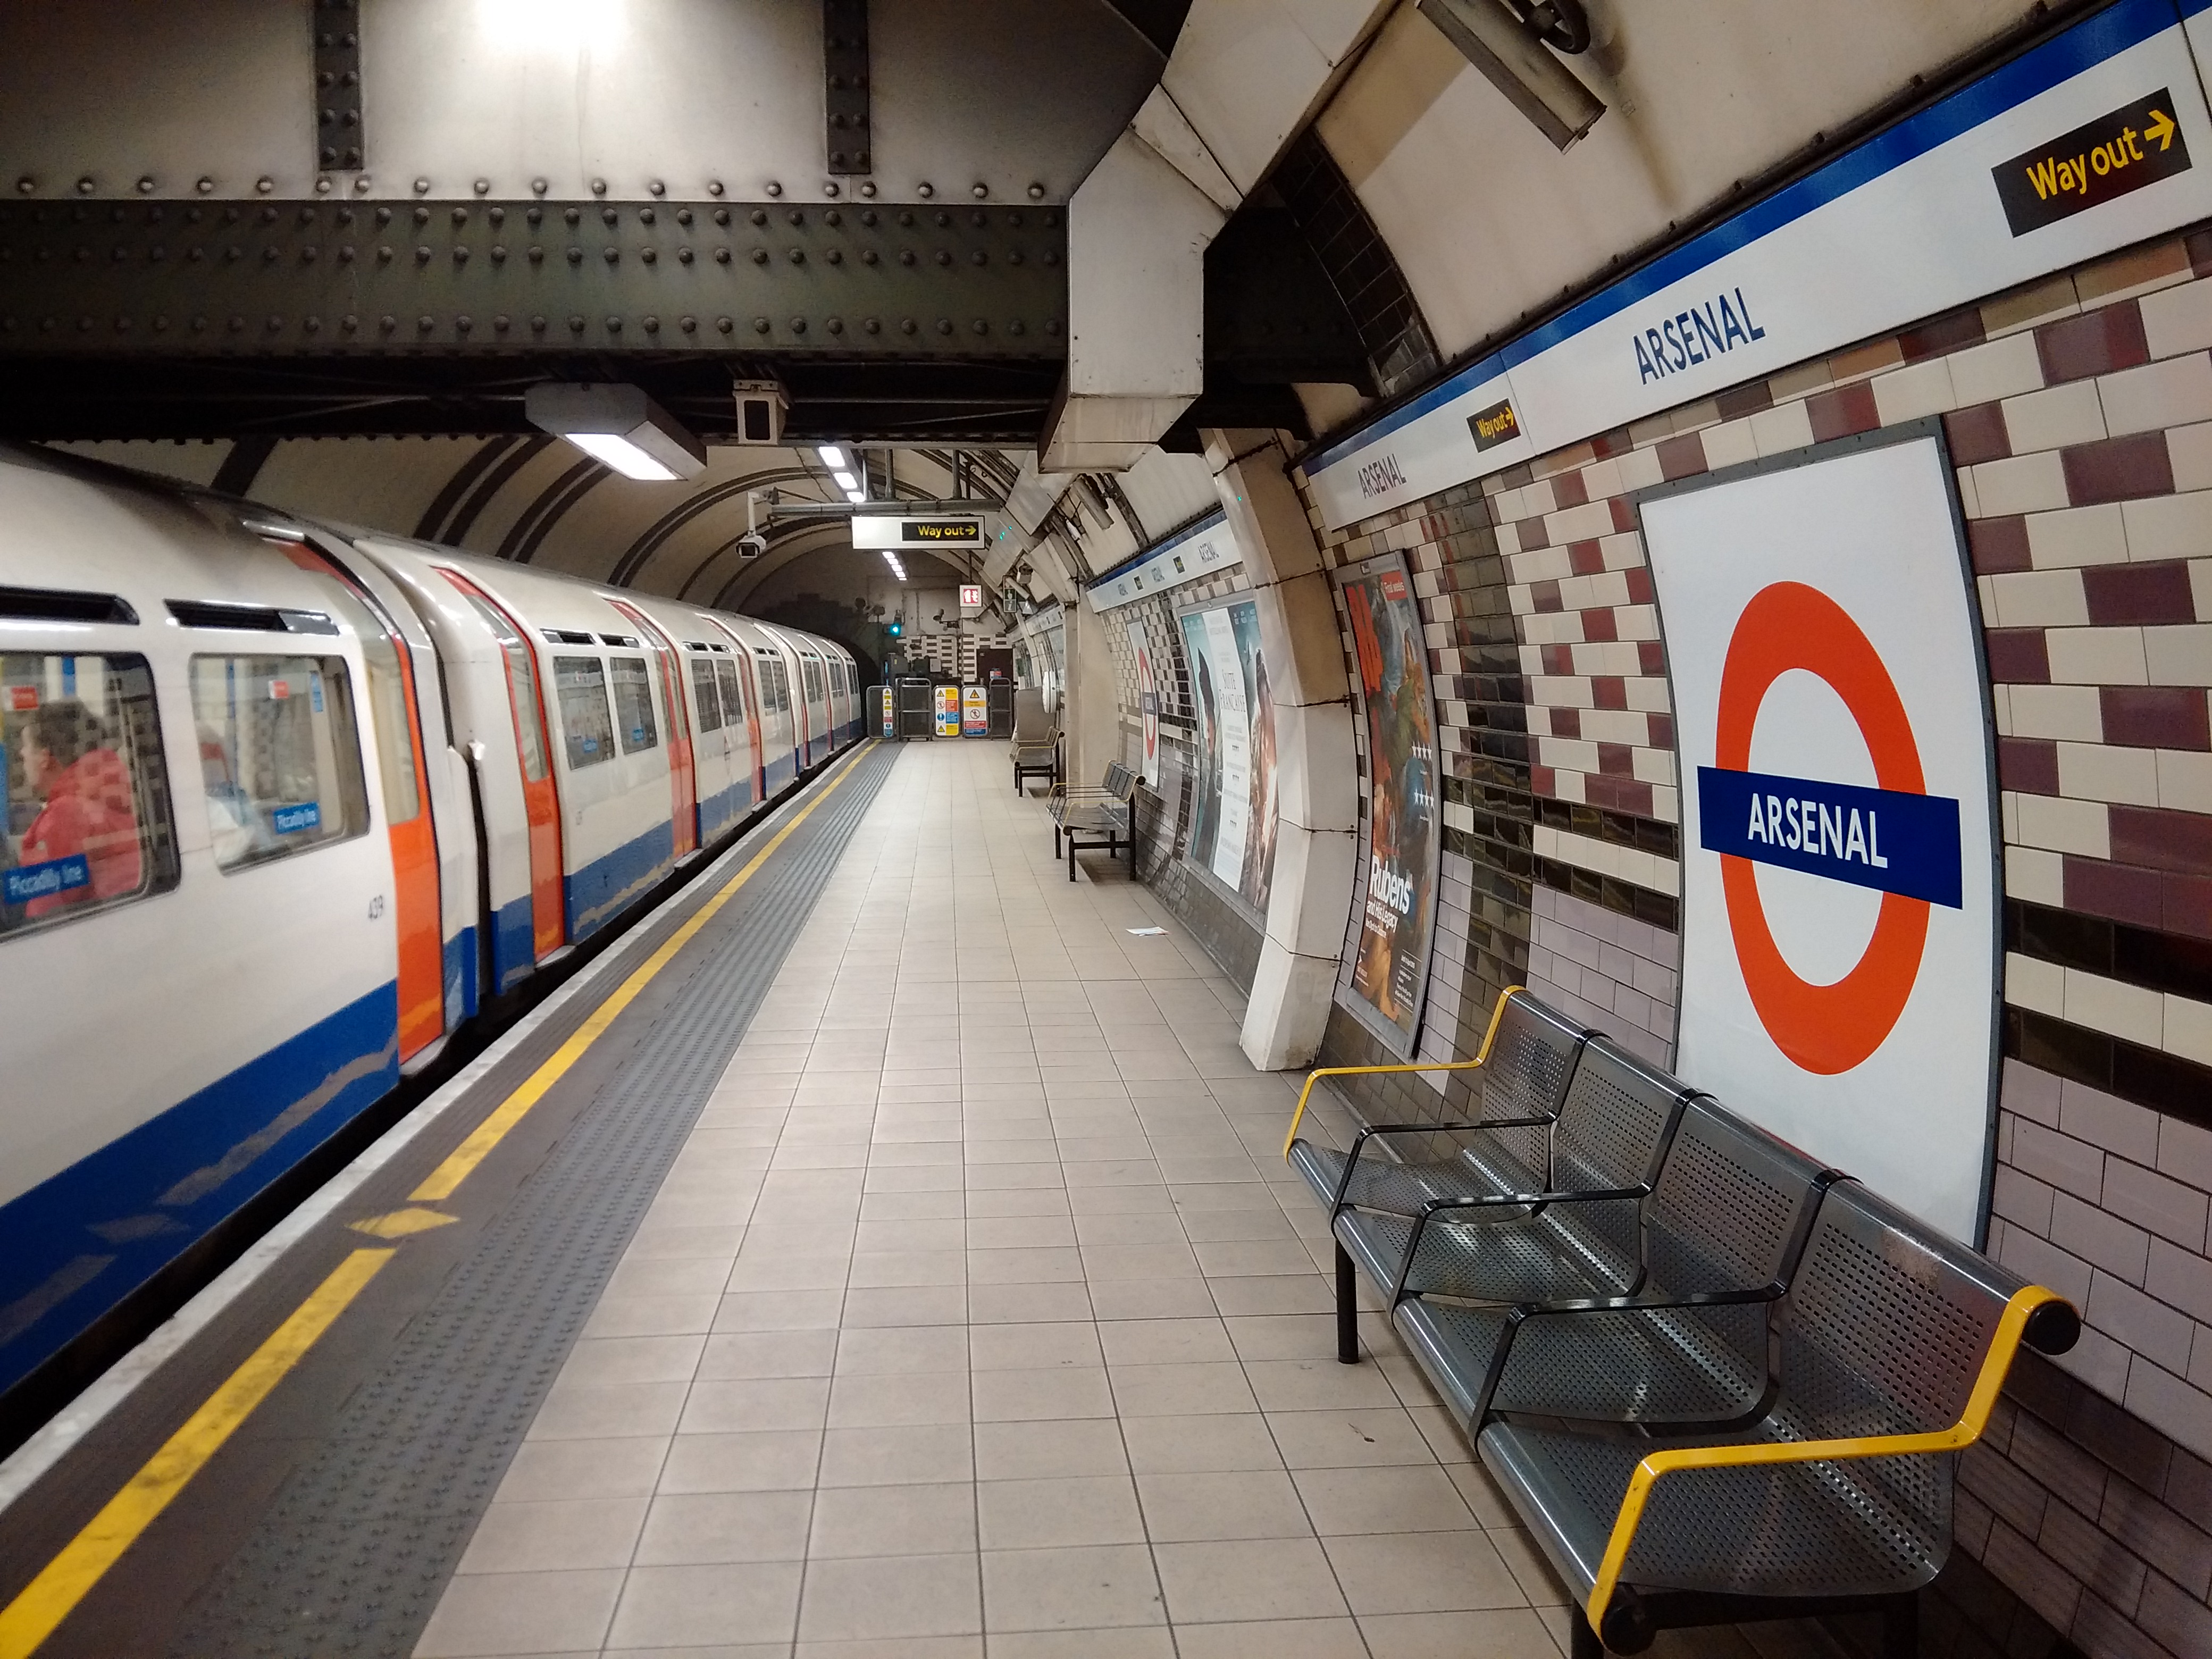 File:Arsenal Underground Station.jpg - Wikimedia Commons